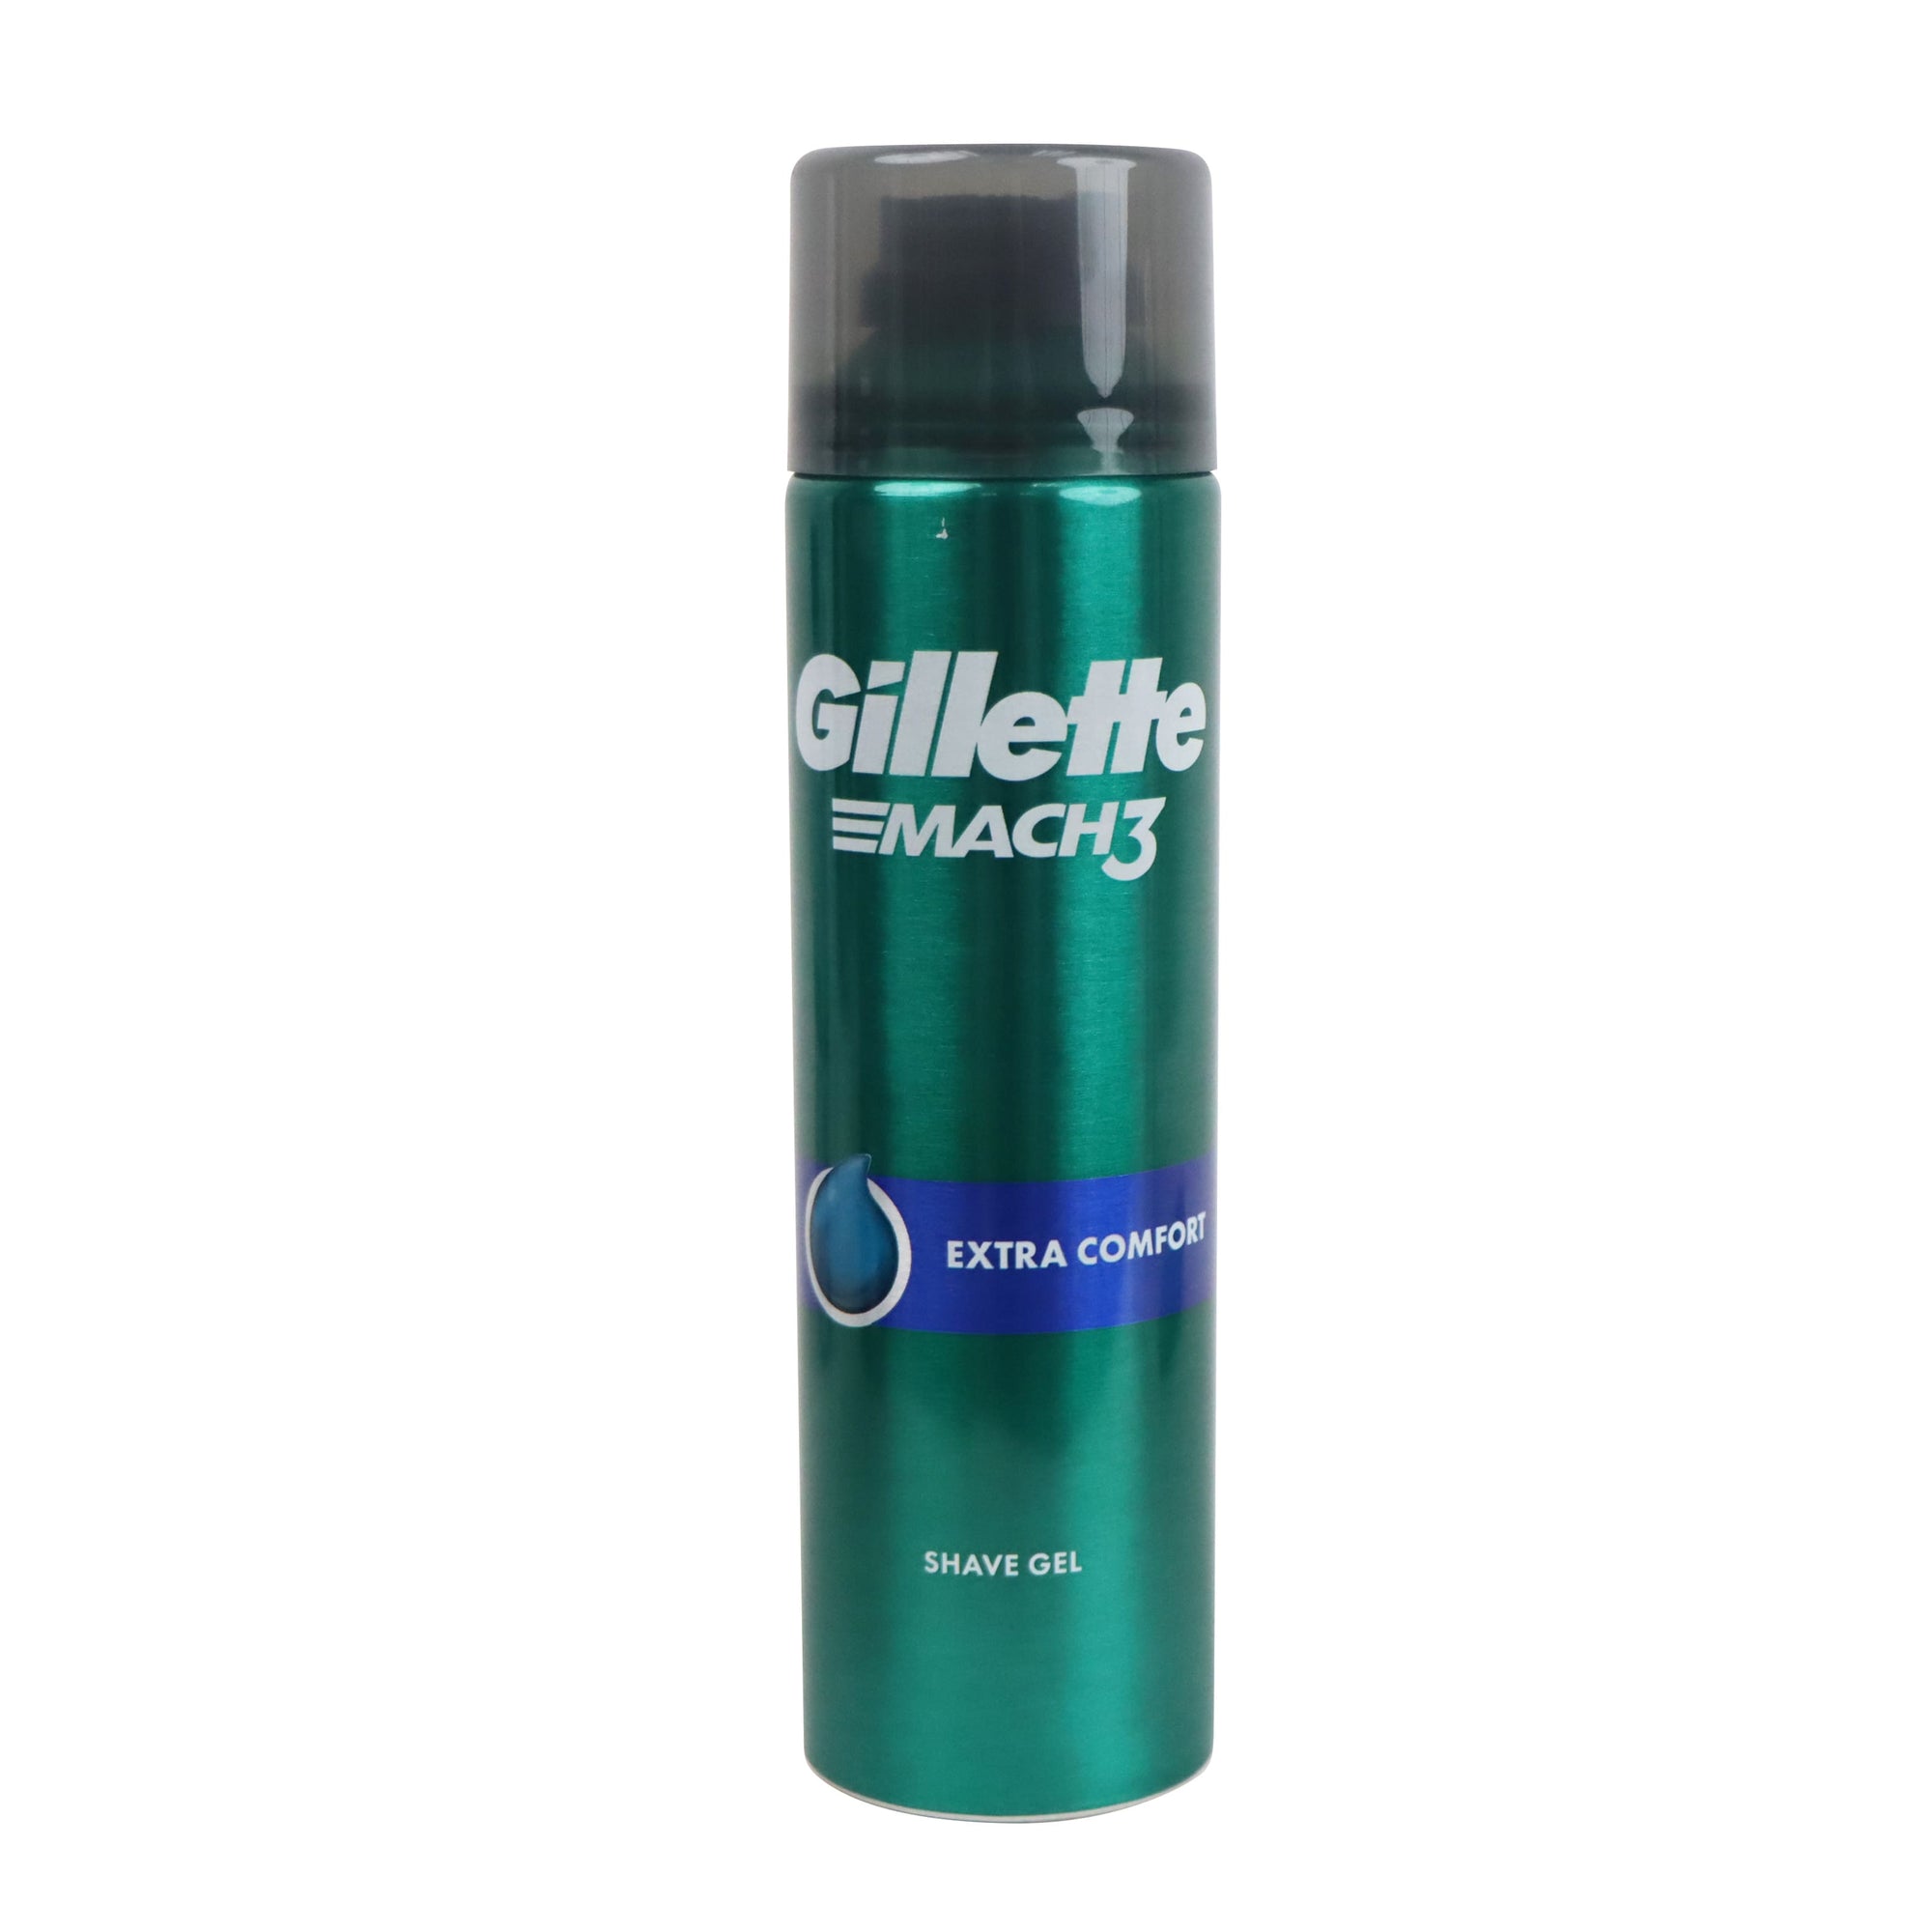 Gillette Mach3 Extra Comfort Shave Gel 200ml